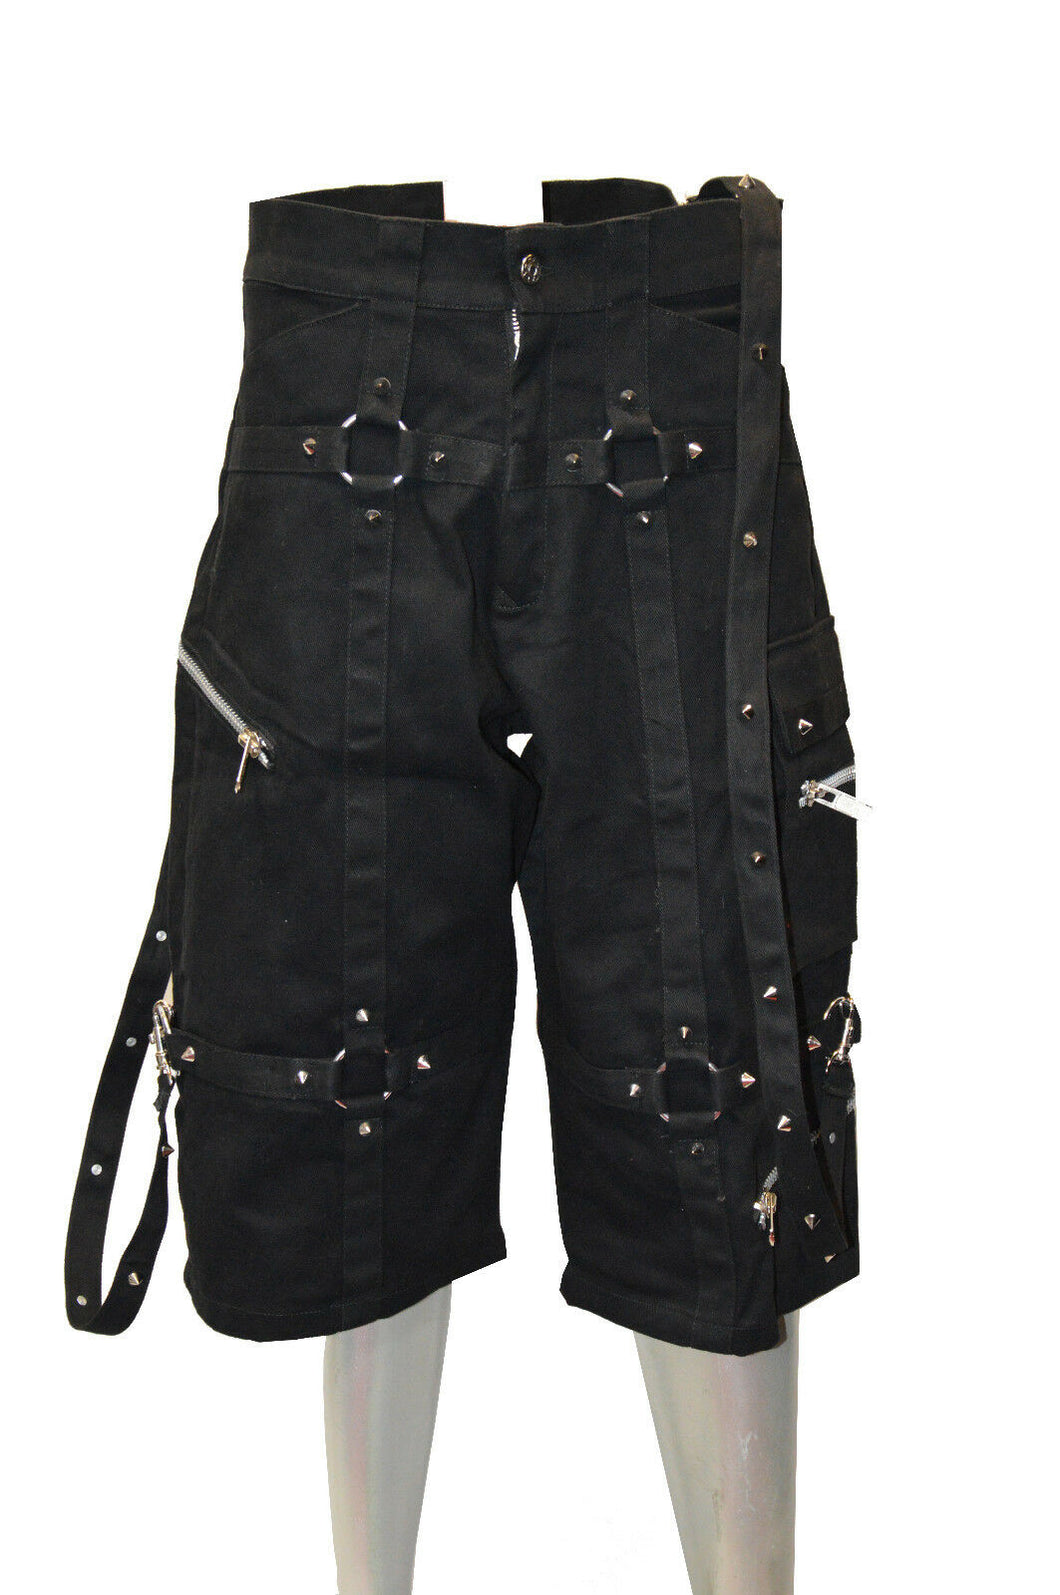 Kurze Hose Jeans Denim Punk Gothic NEU Gr. 30 - 44